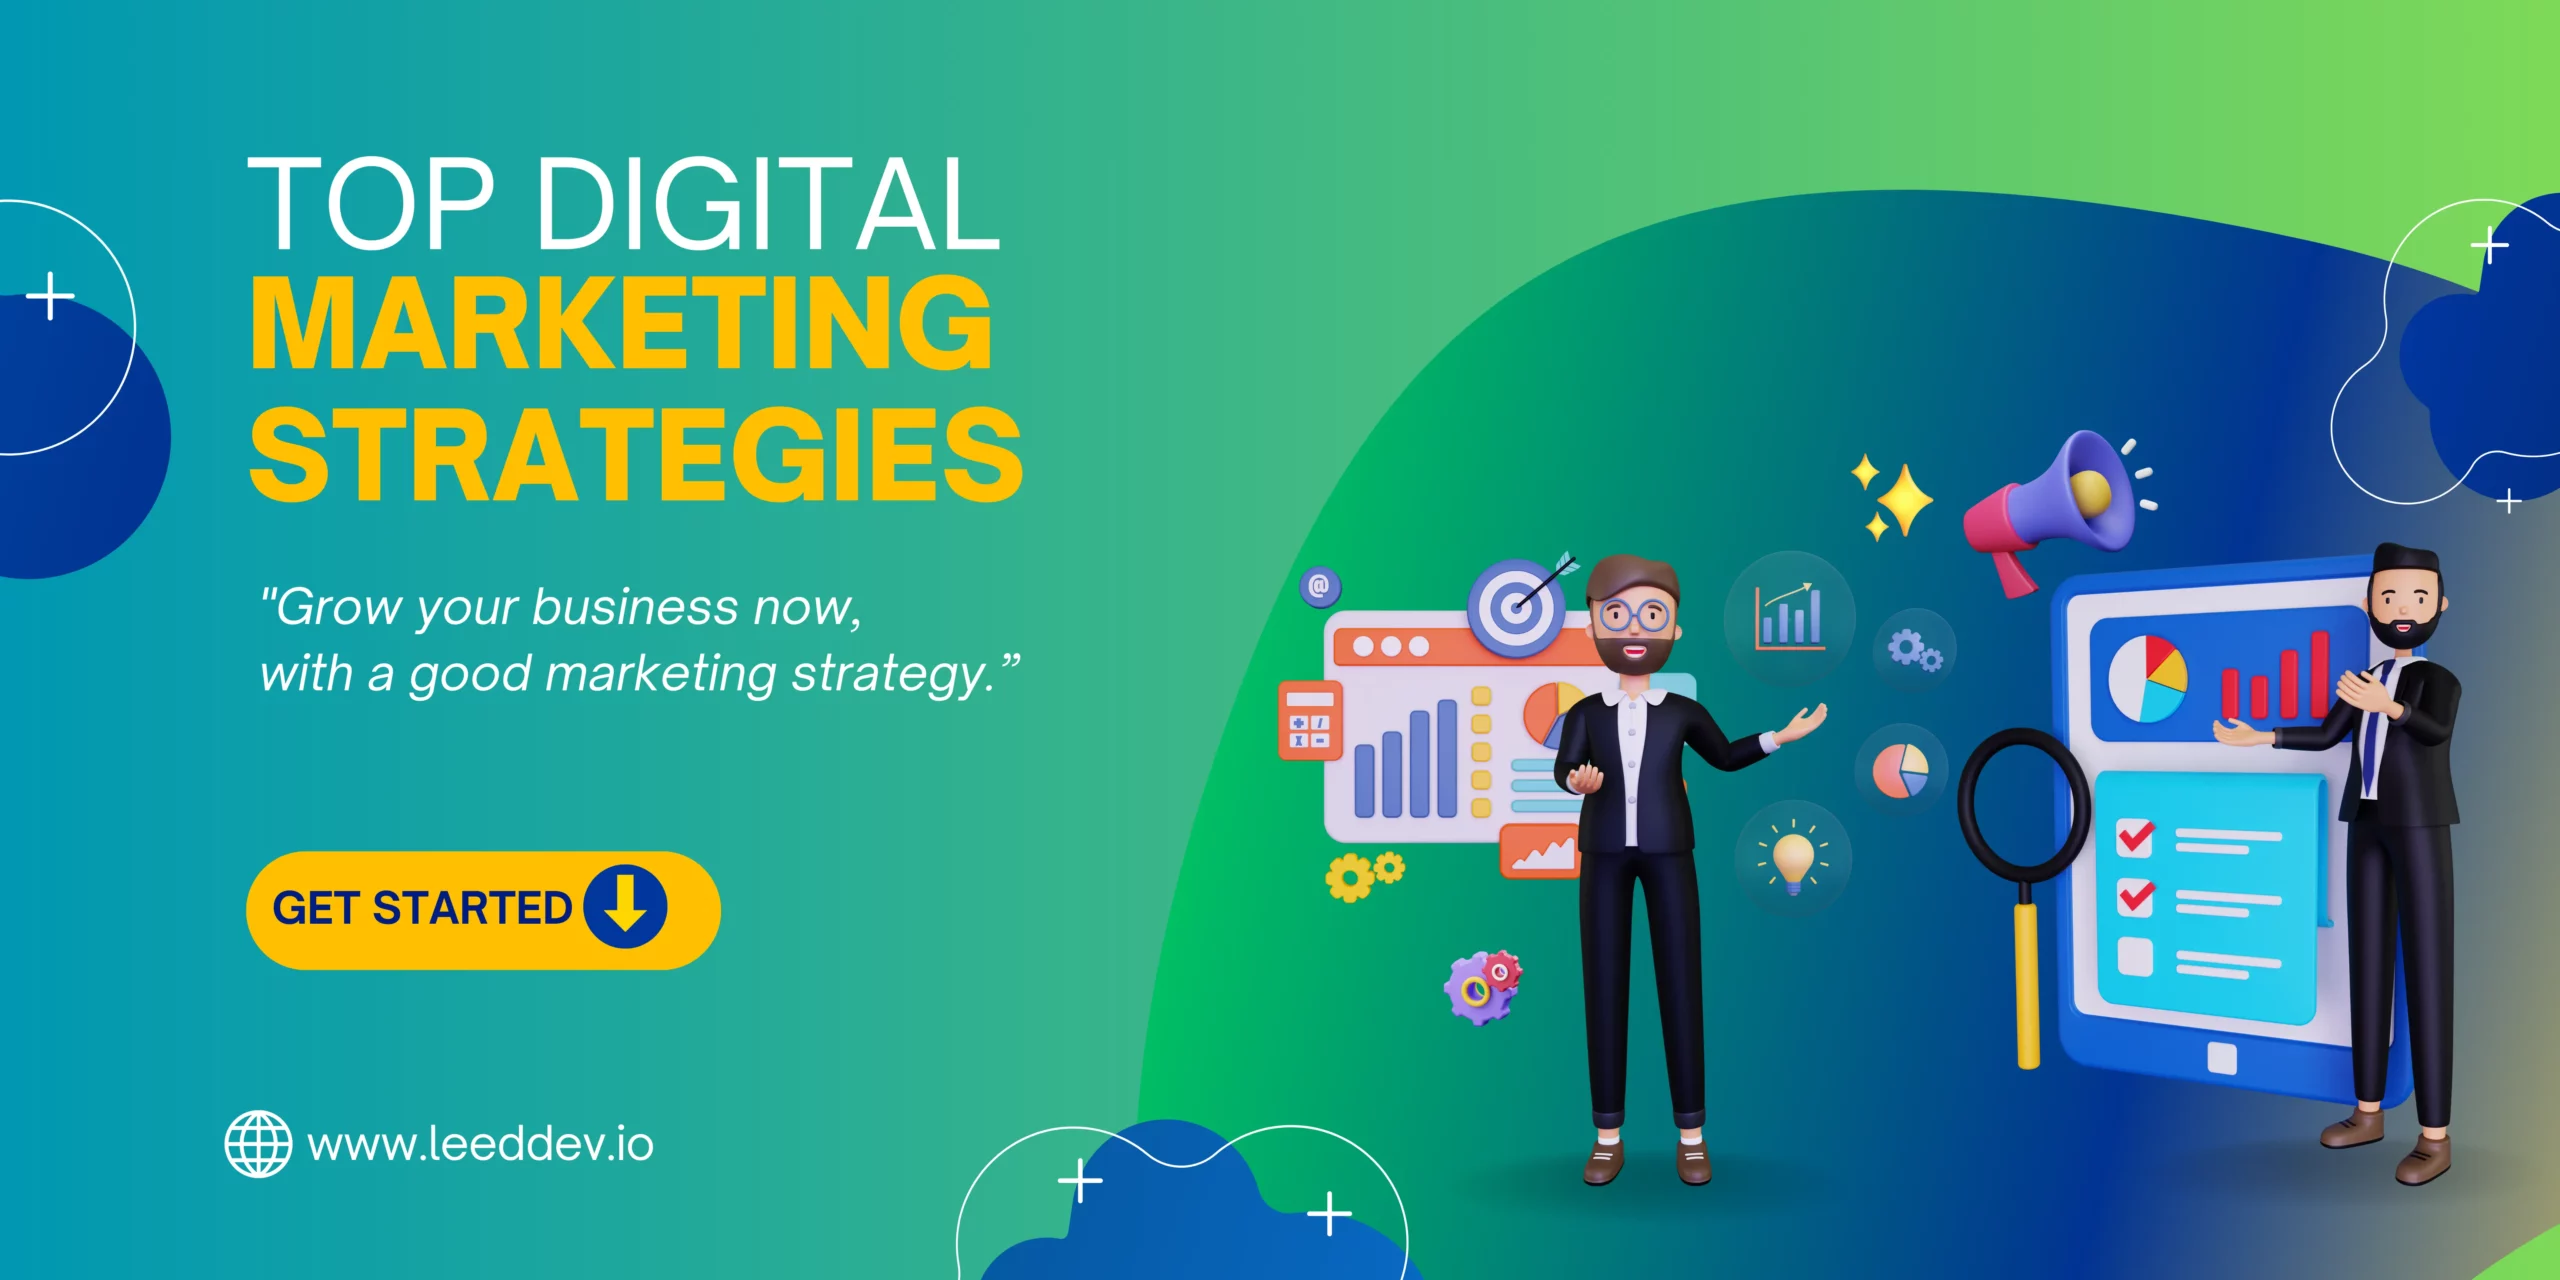 Top 10 Digital Marketing Strategies.